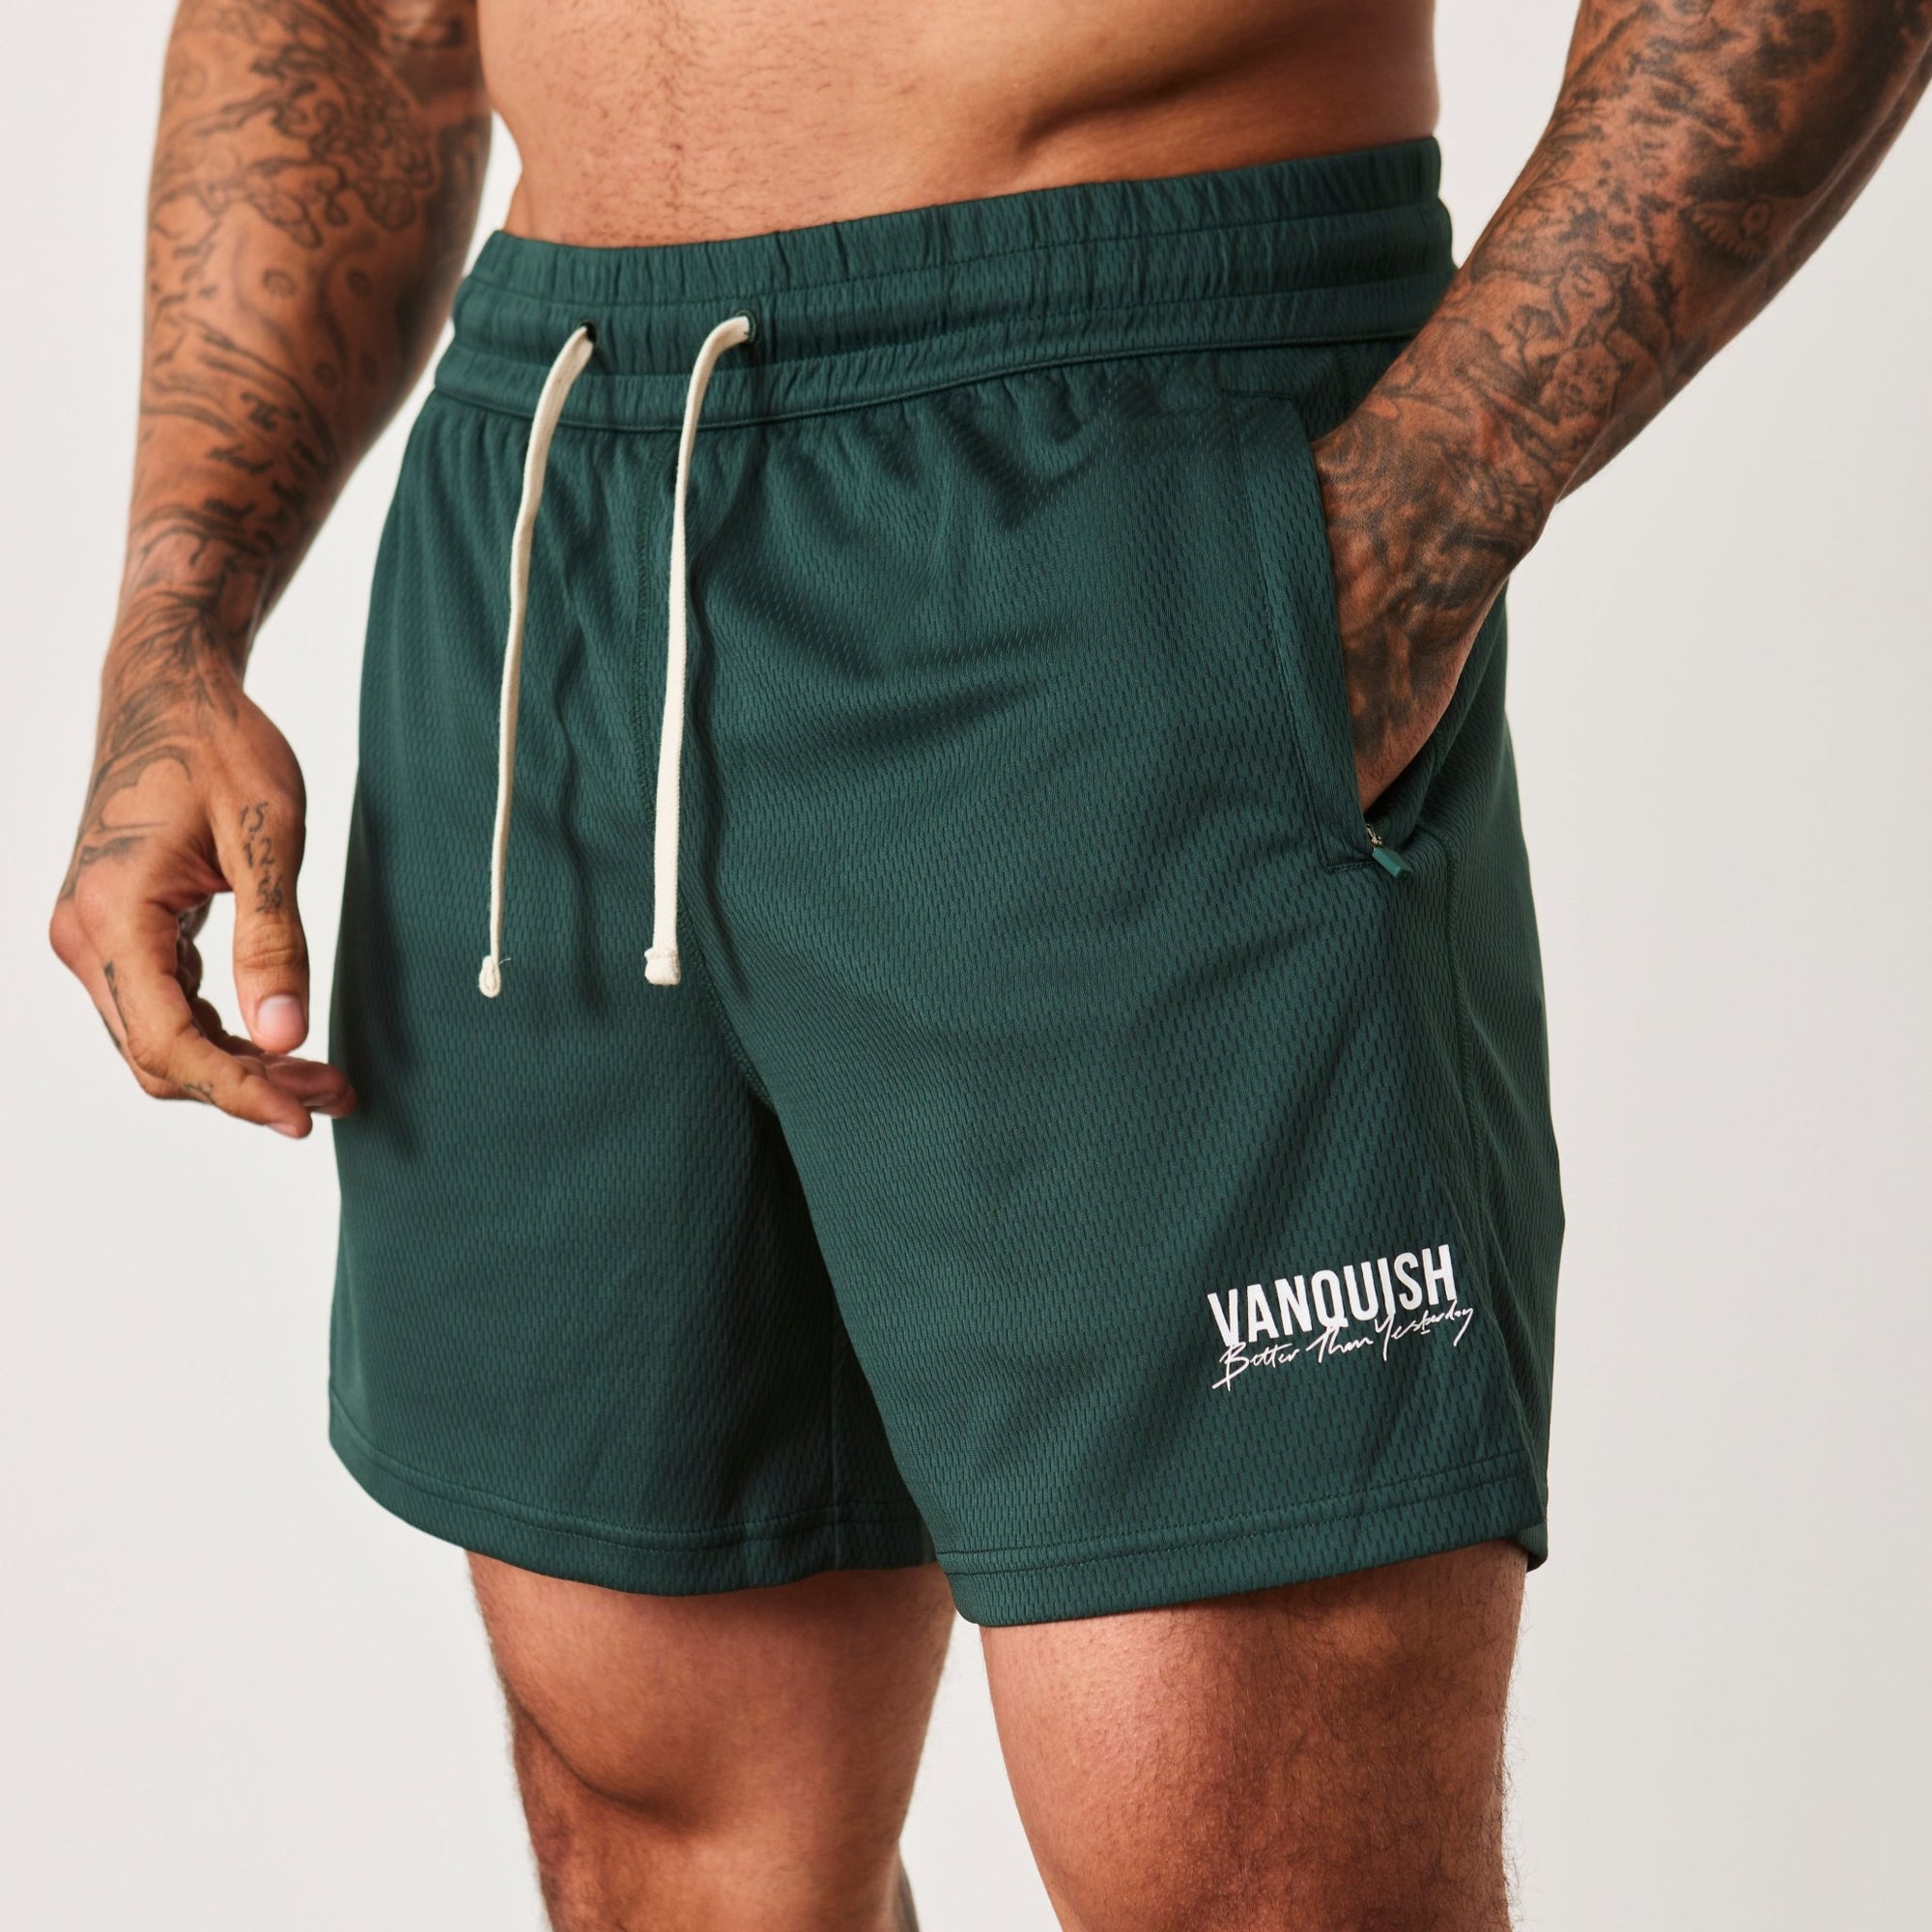 Vanquish BTY Palm Green Mesh Shorts - Vanquish Fitness